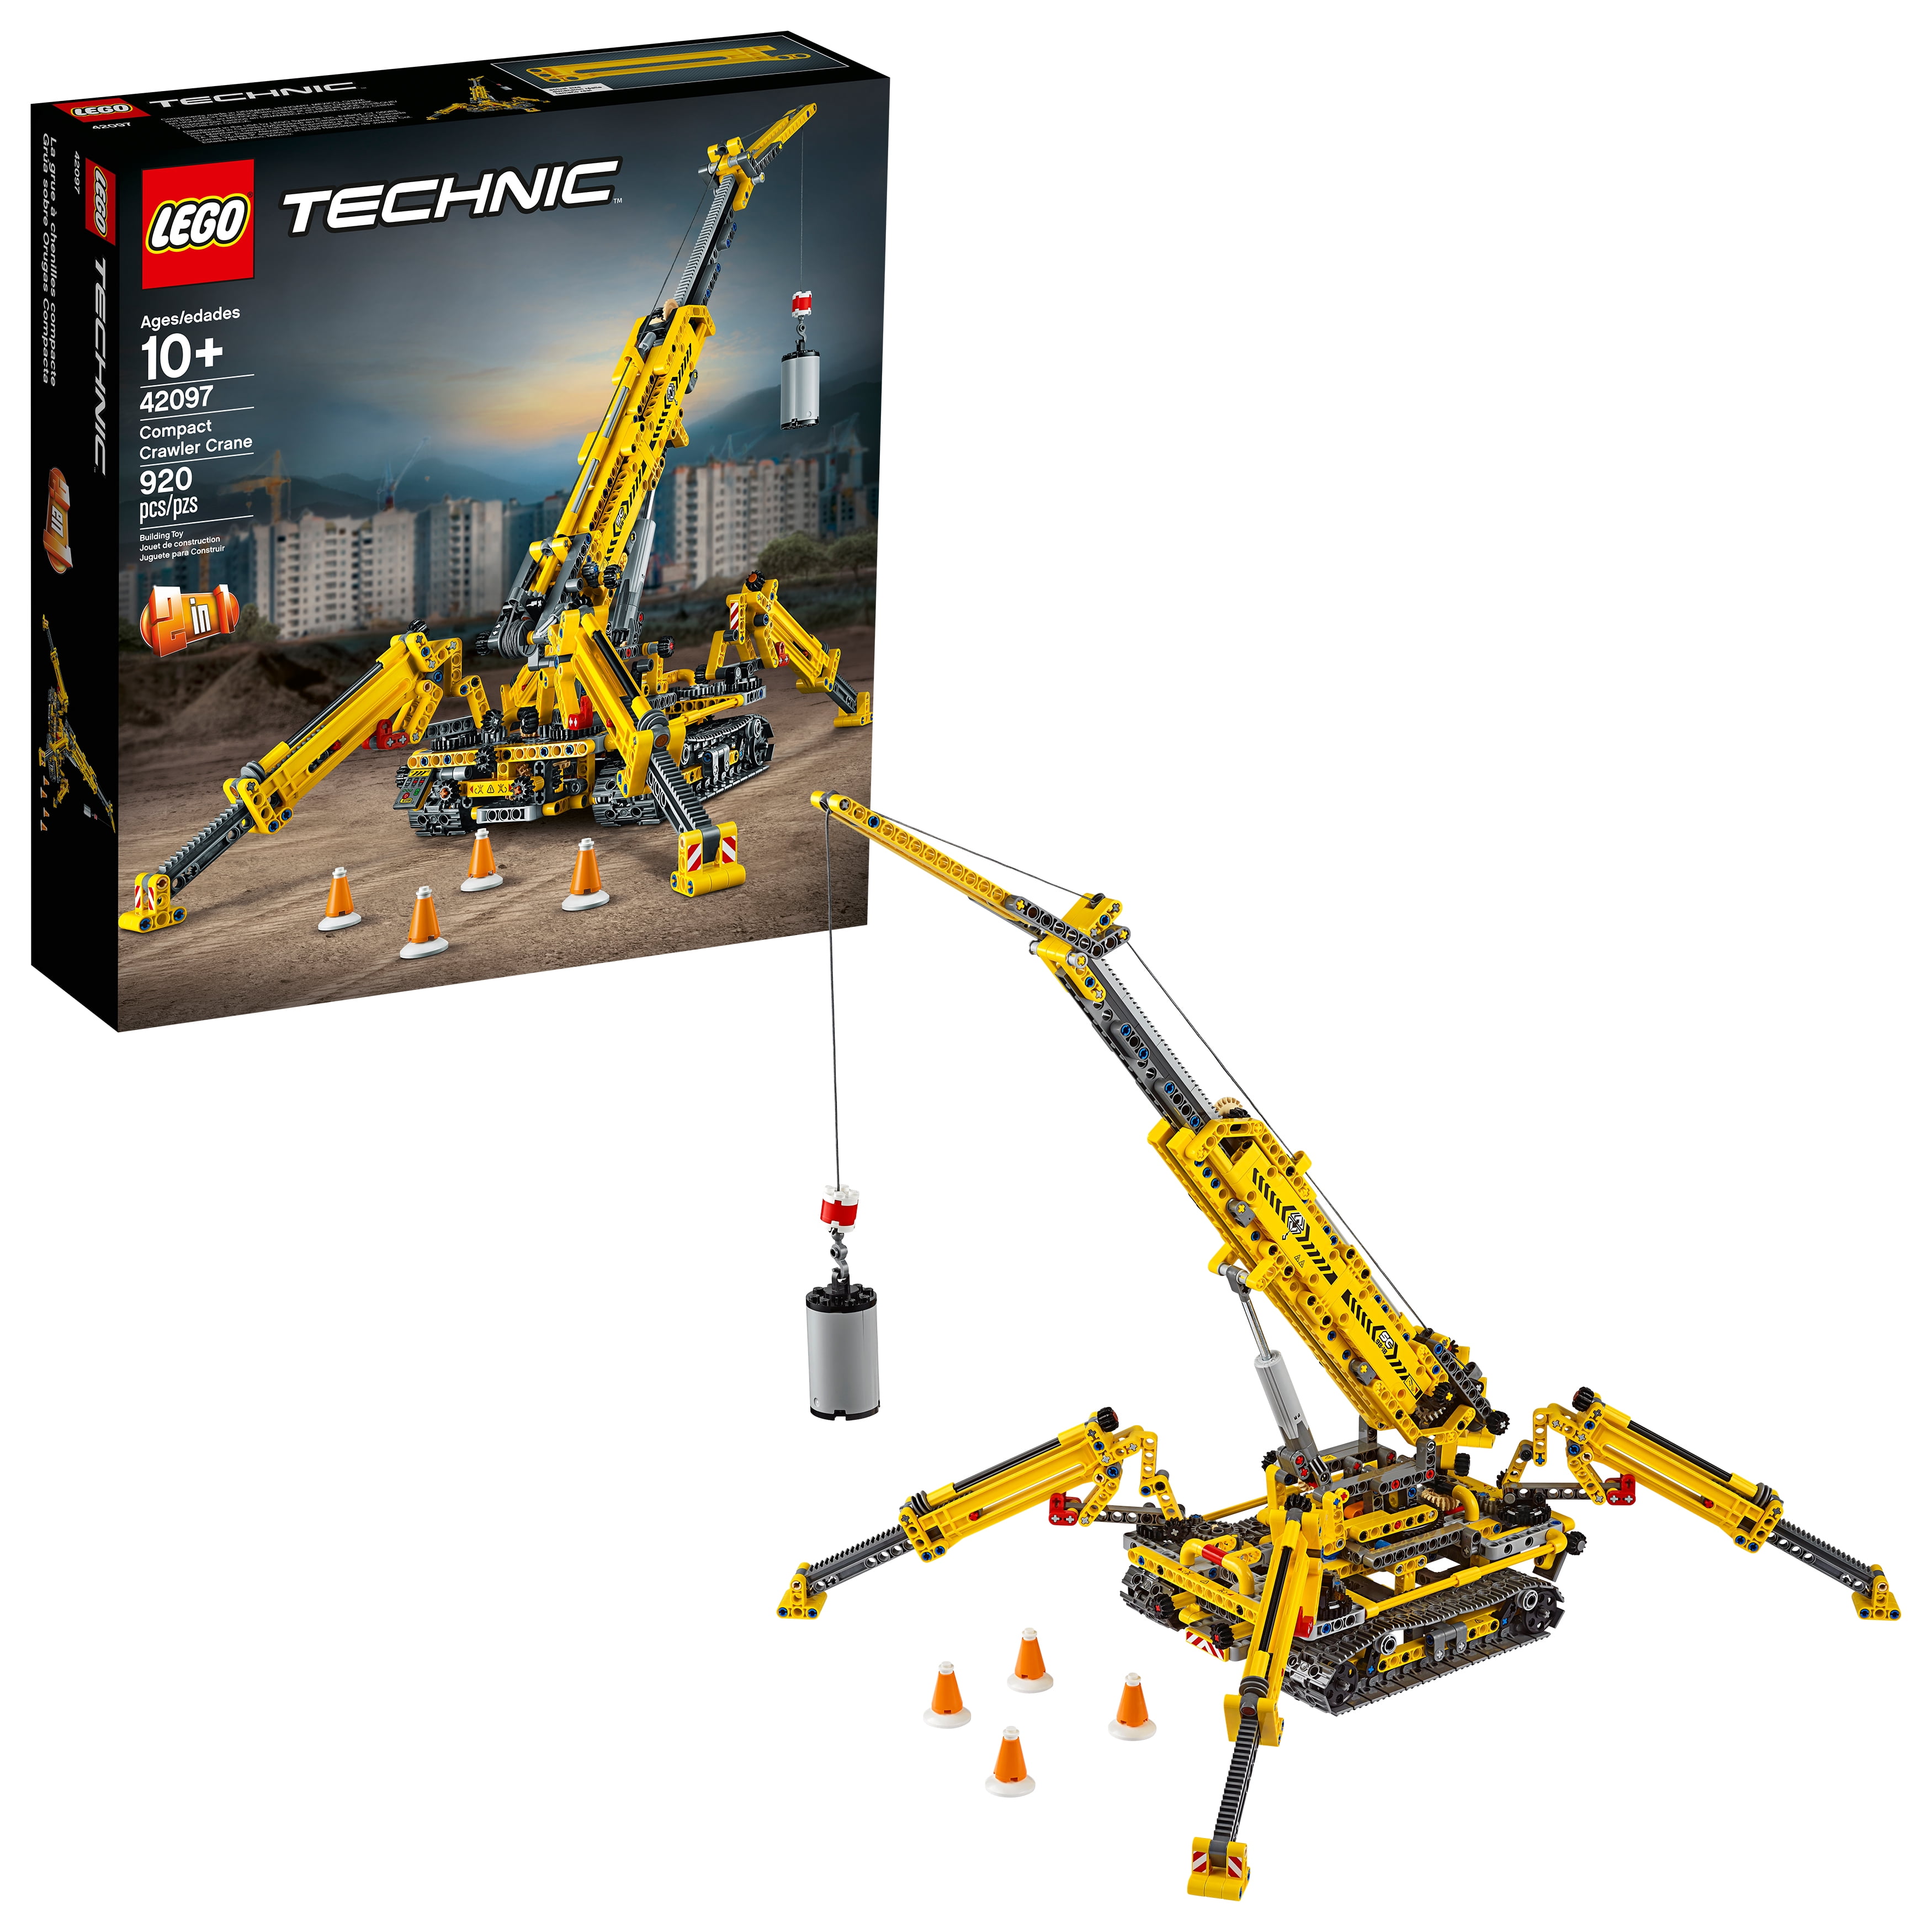 Neuropati bandage internettet LEGO Technic Compact Crawler Crane 42097 Construction Model Crane Set (920  Pieces) - Walmart.com